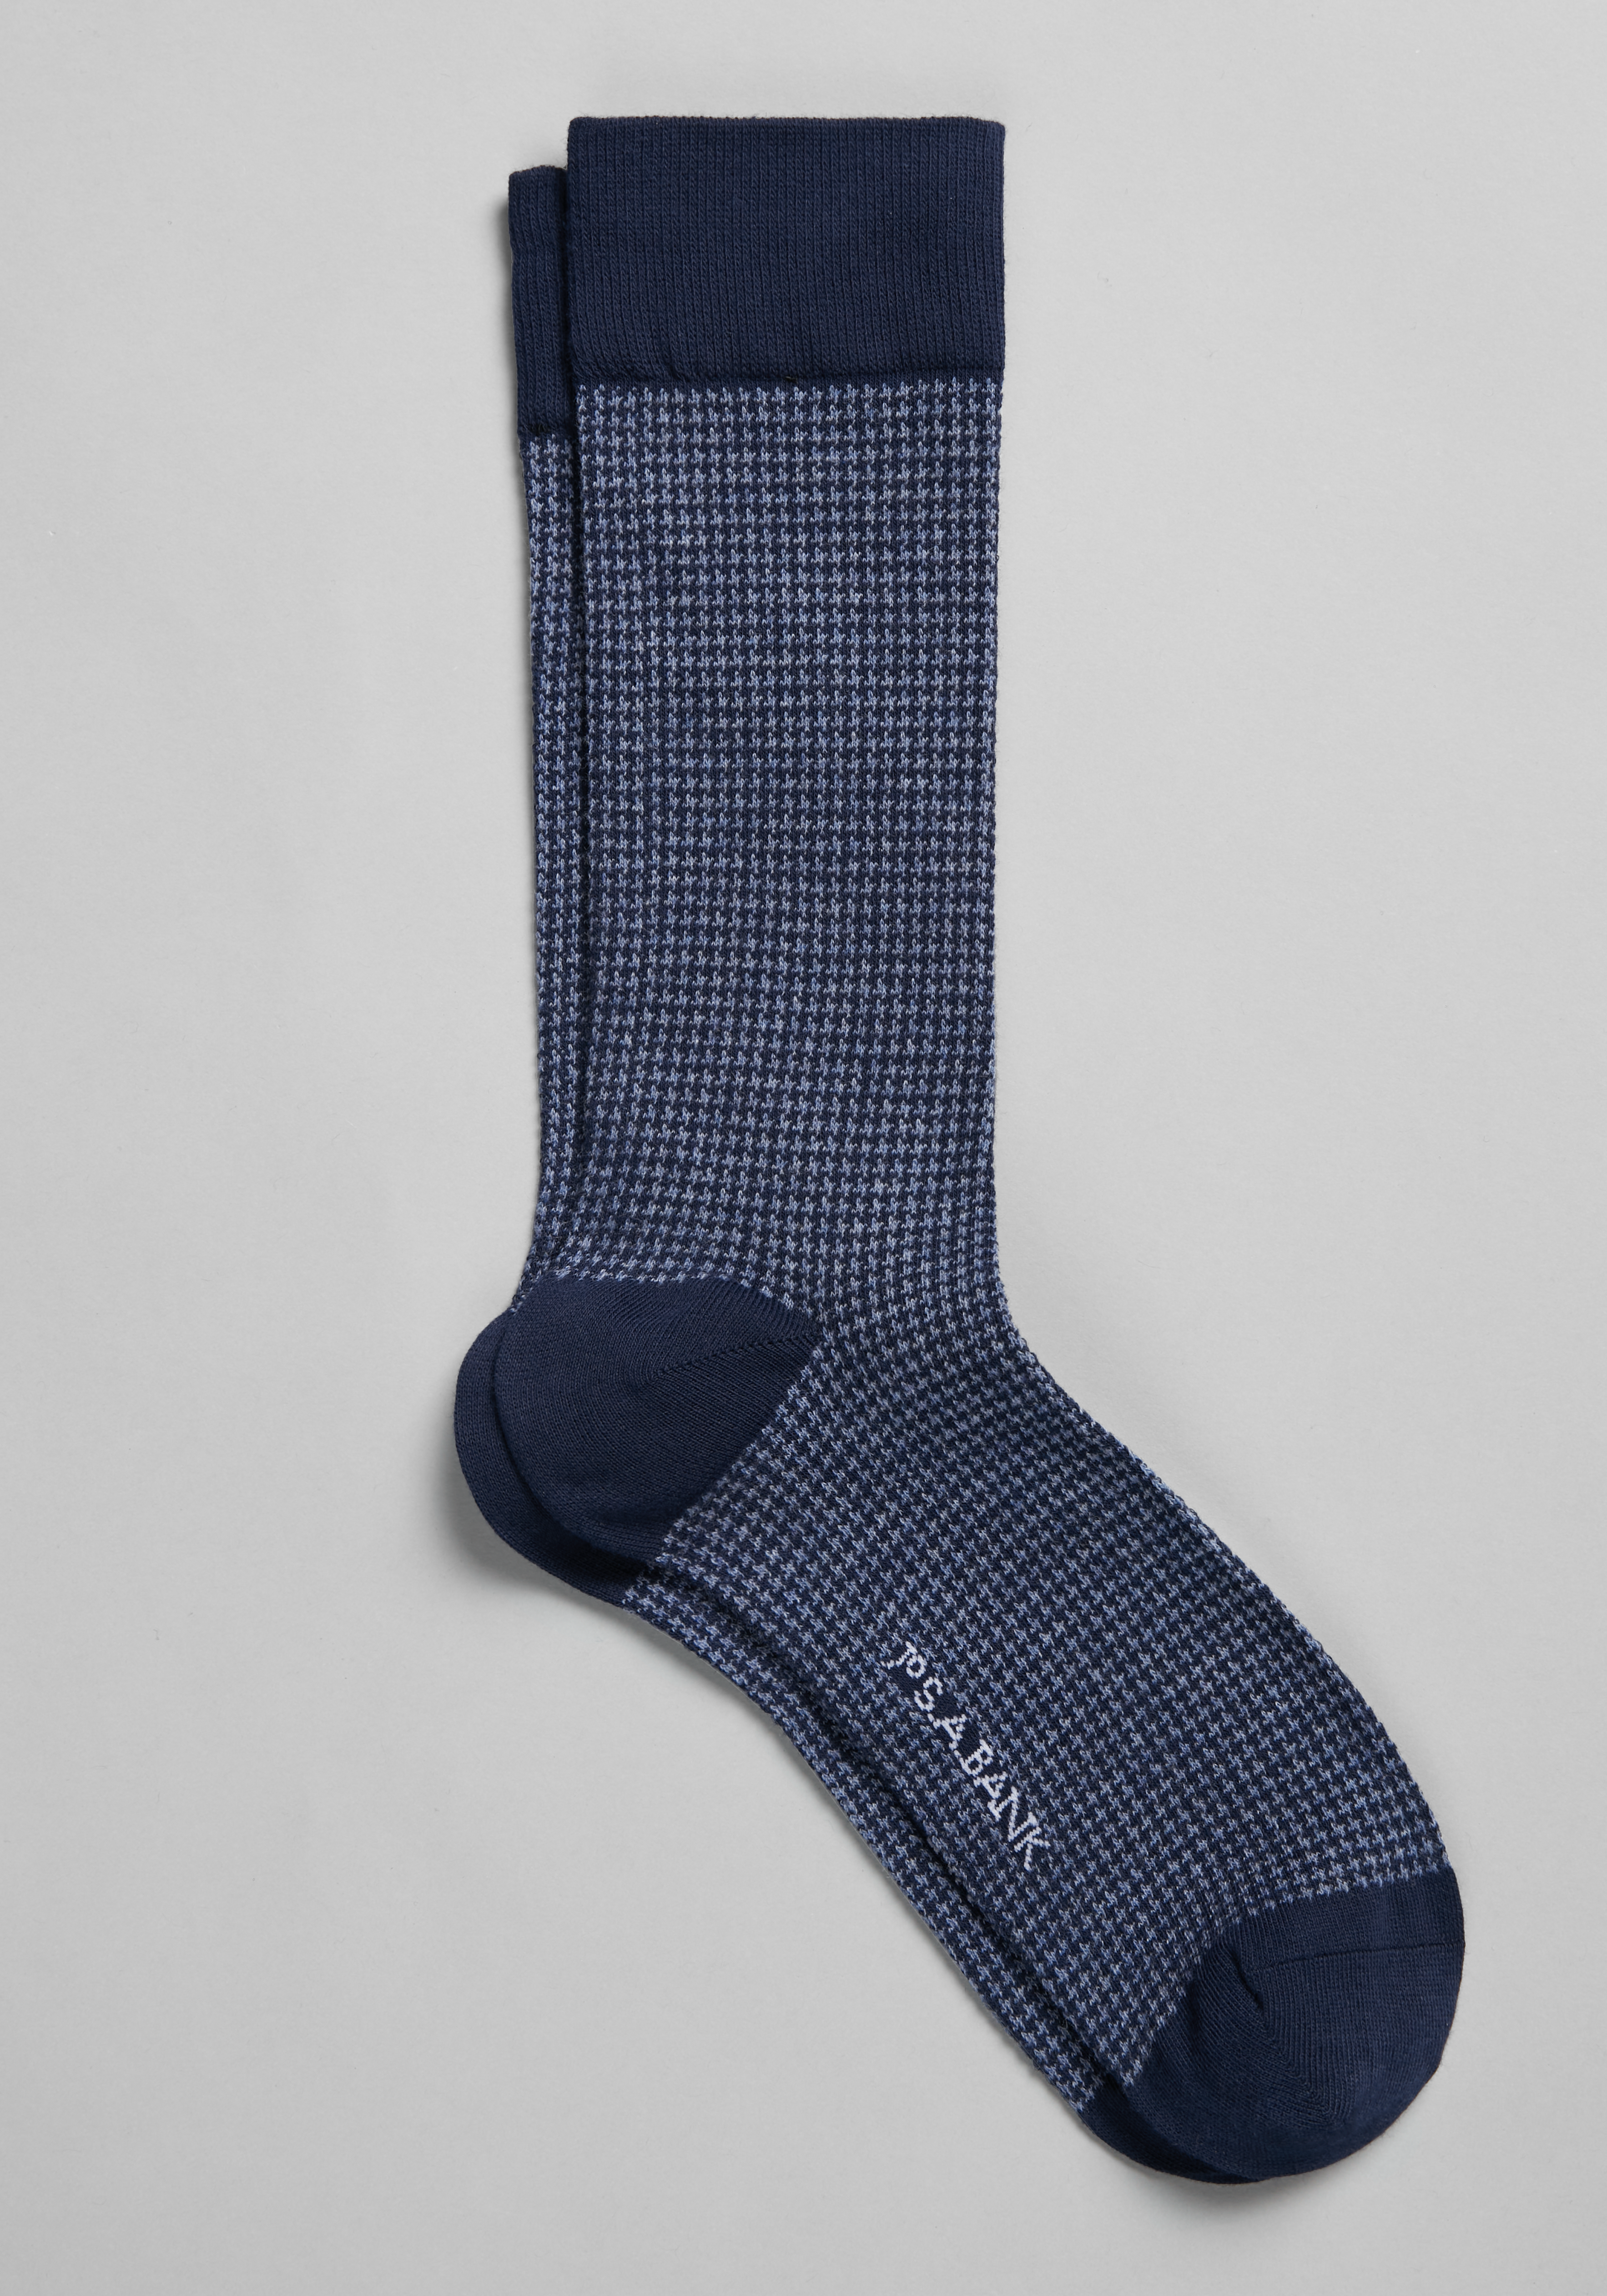 Men's Socks | Wool Dress Socks & 3 Packs | JoS. A. Bank Clothiers